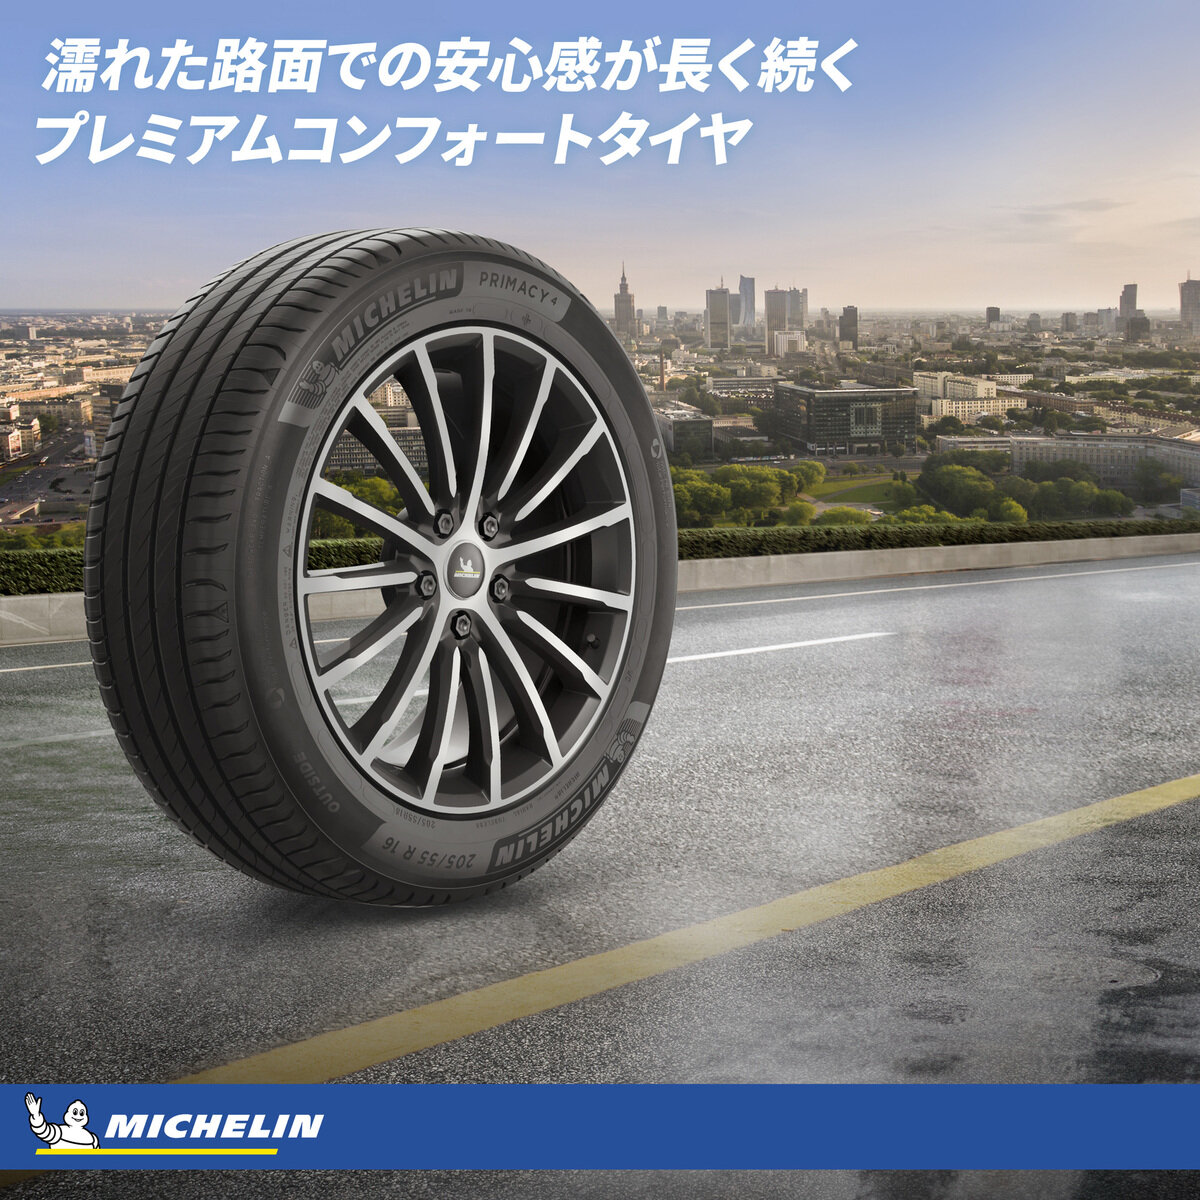 Michelin 215/55 R17 94W TL PRIMACY 4+ MI | Costco Japan